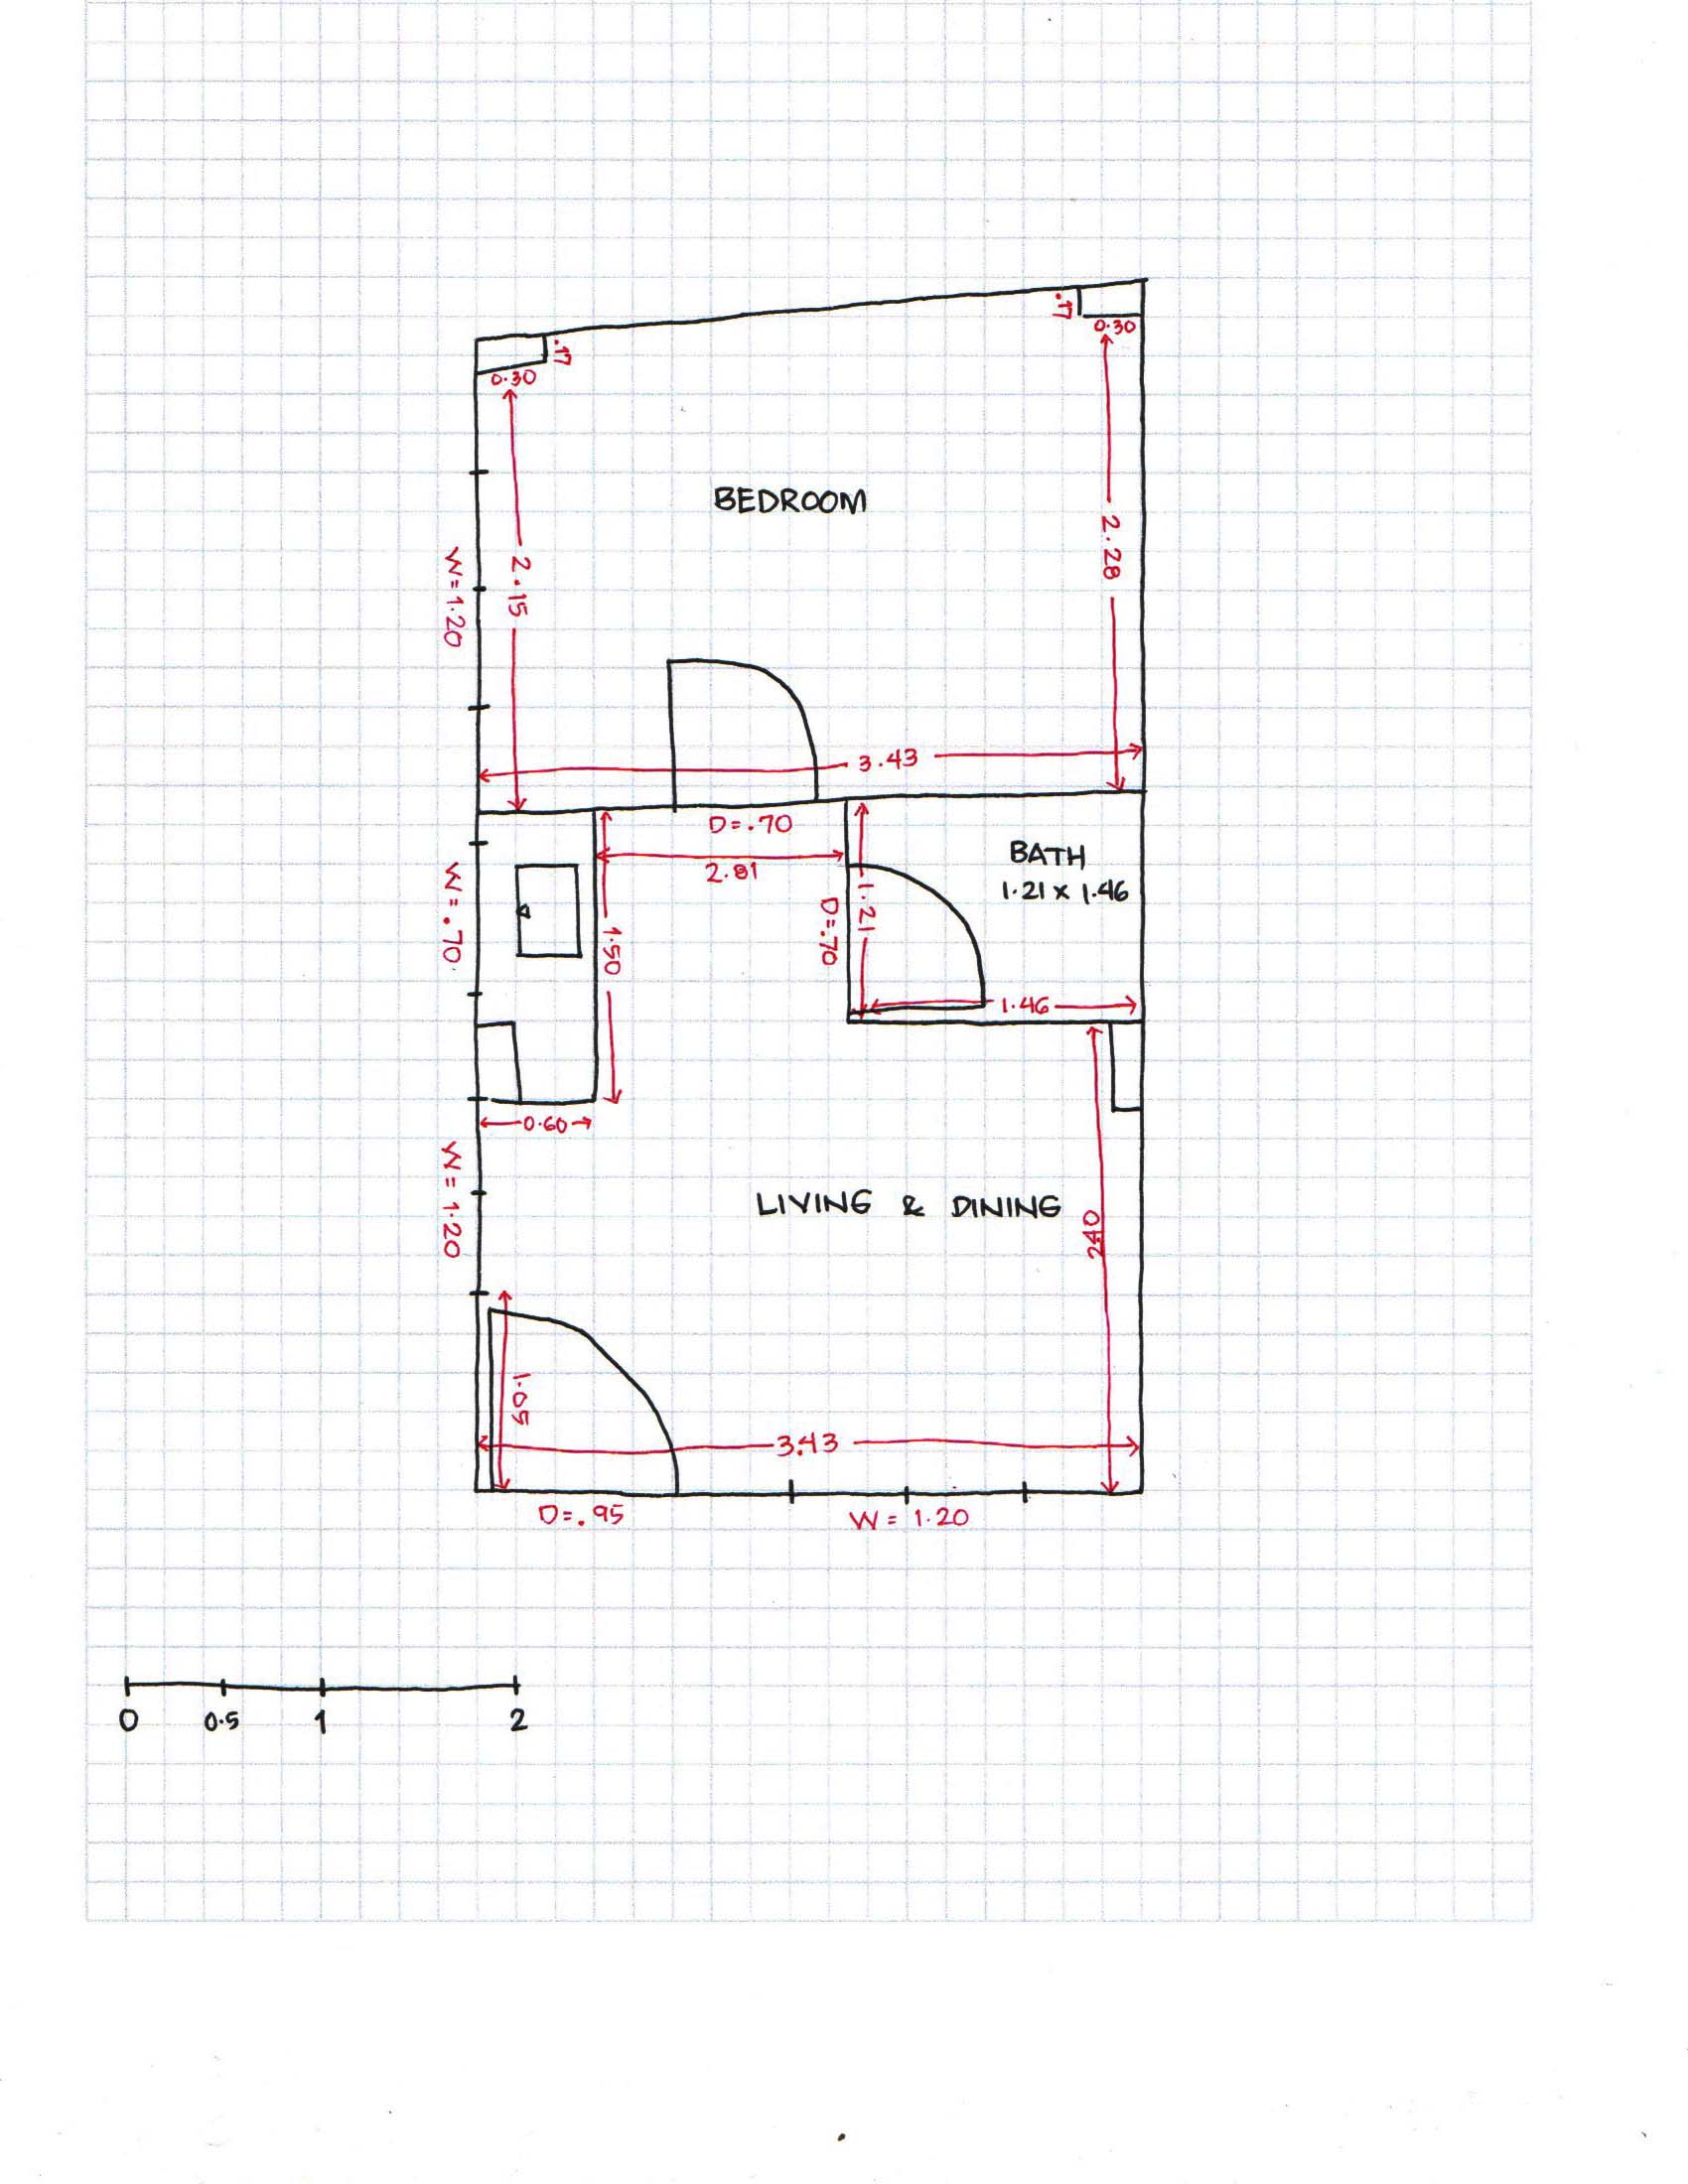 How To Create A Floor Plan Sketch - Omorfia Manila